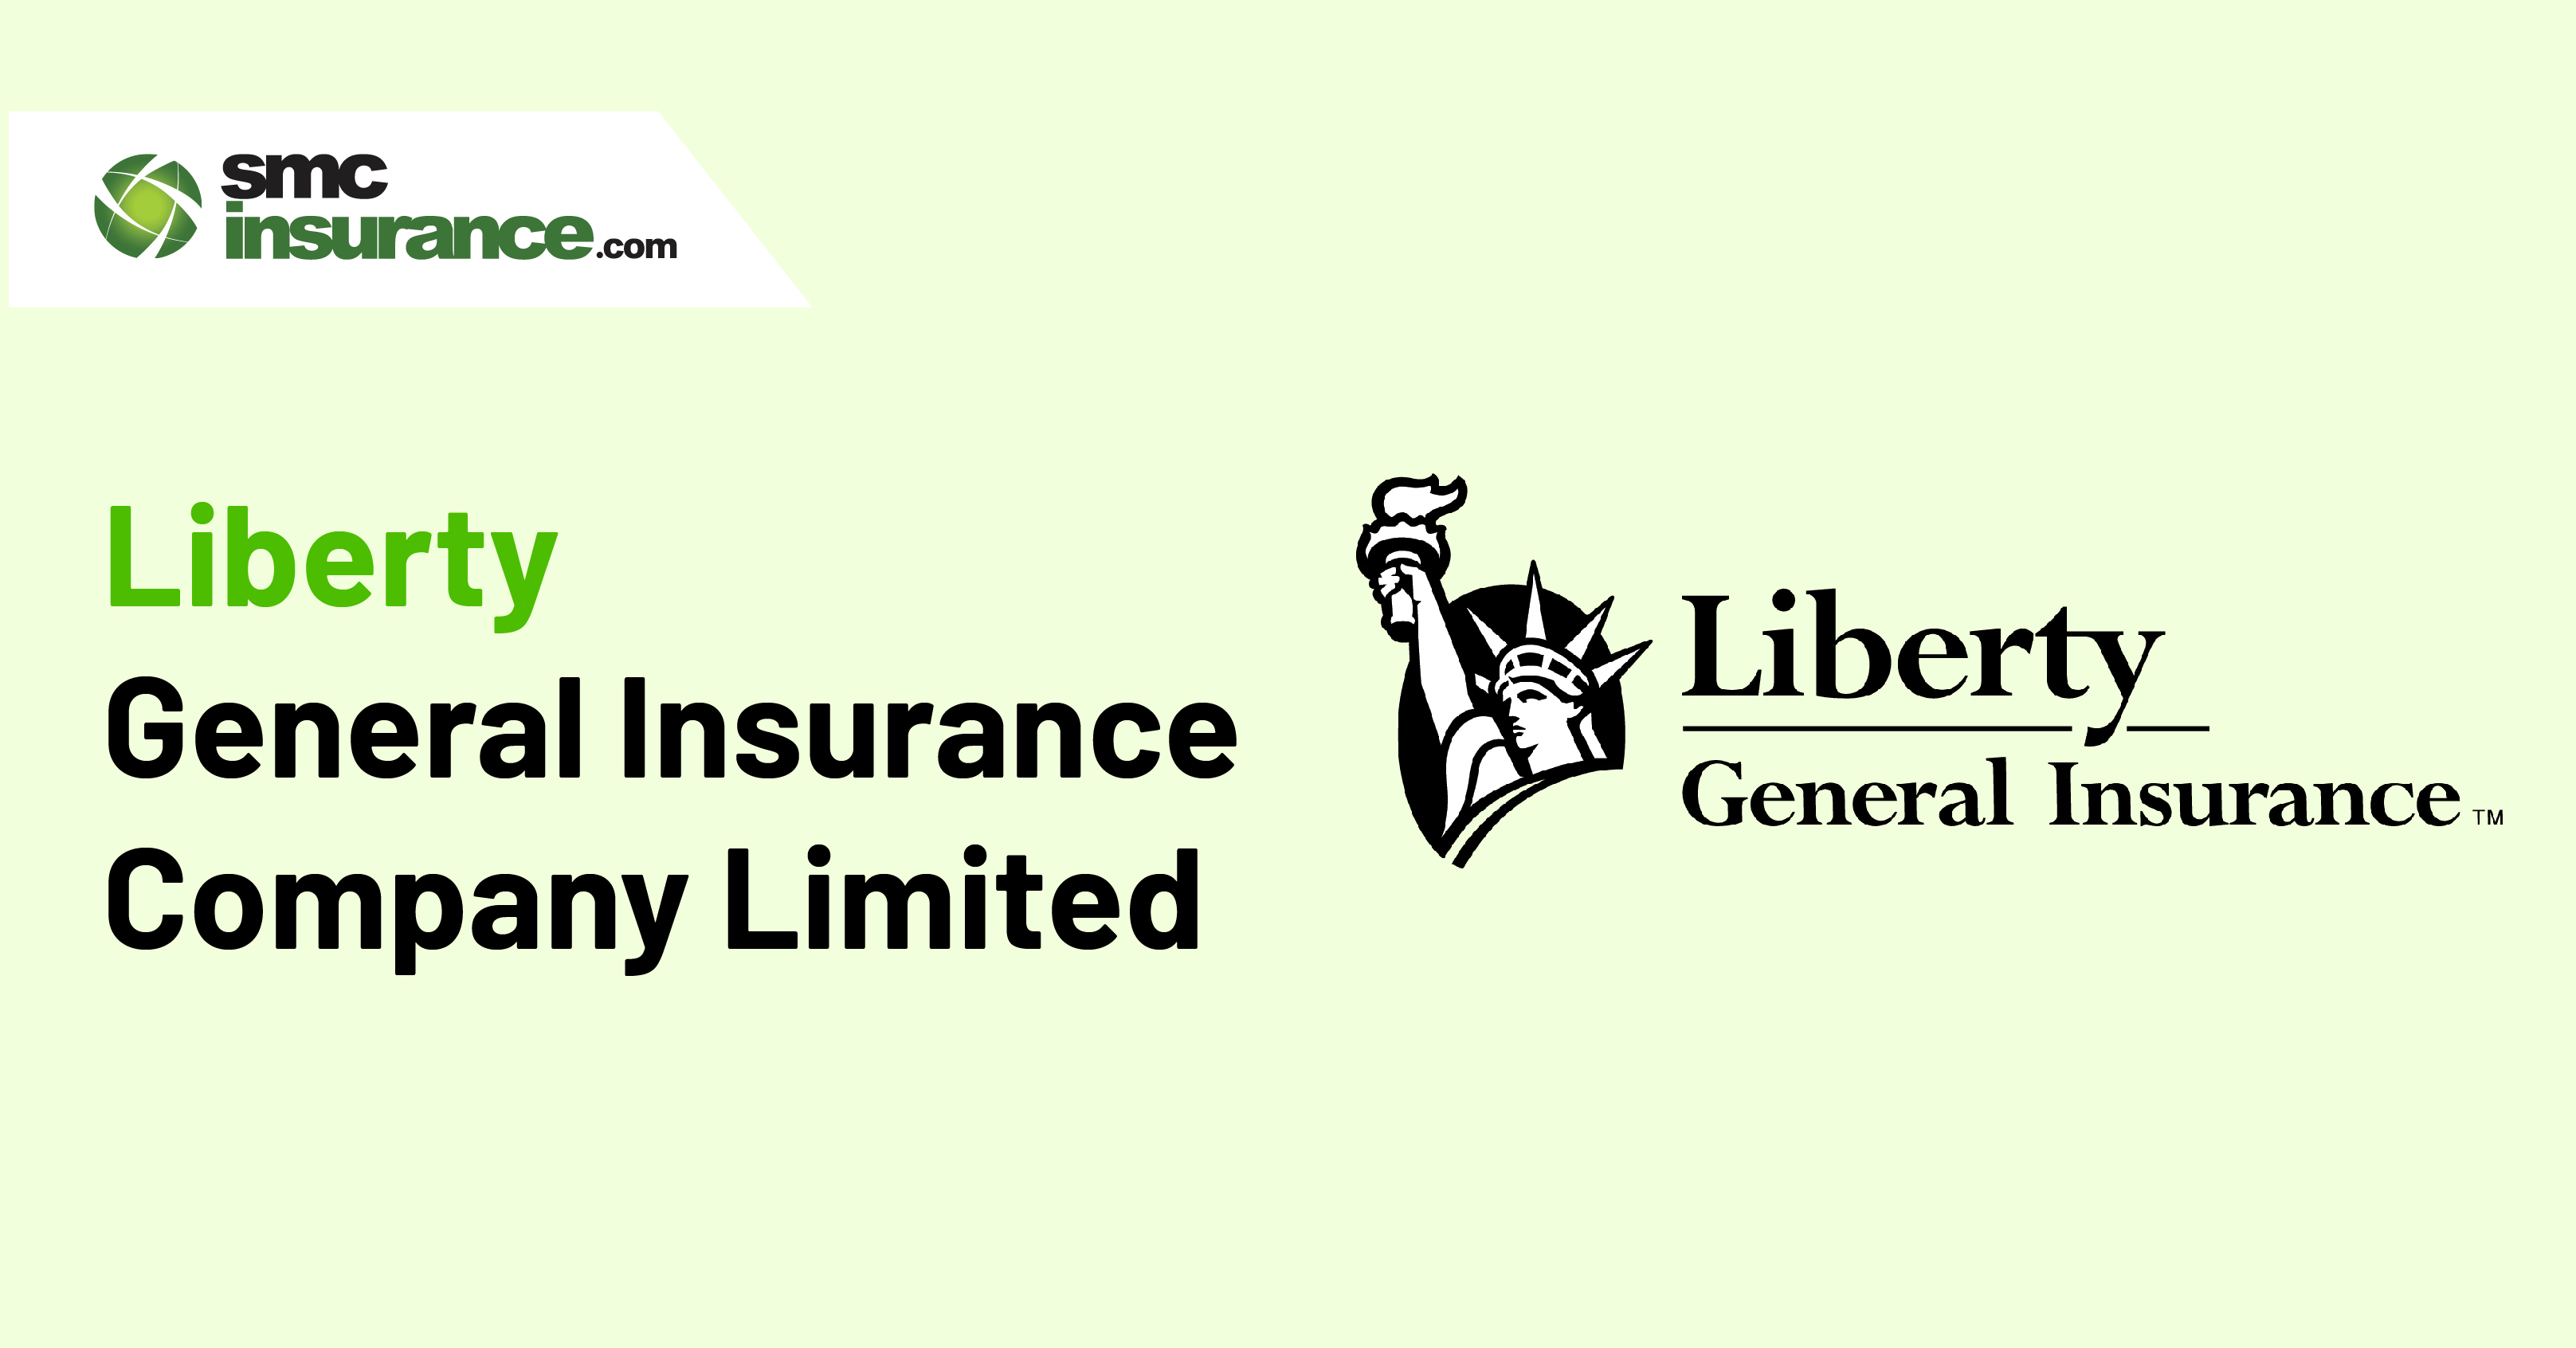 Liberty General Insurance Company Limited